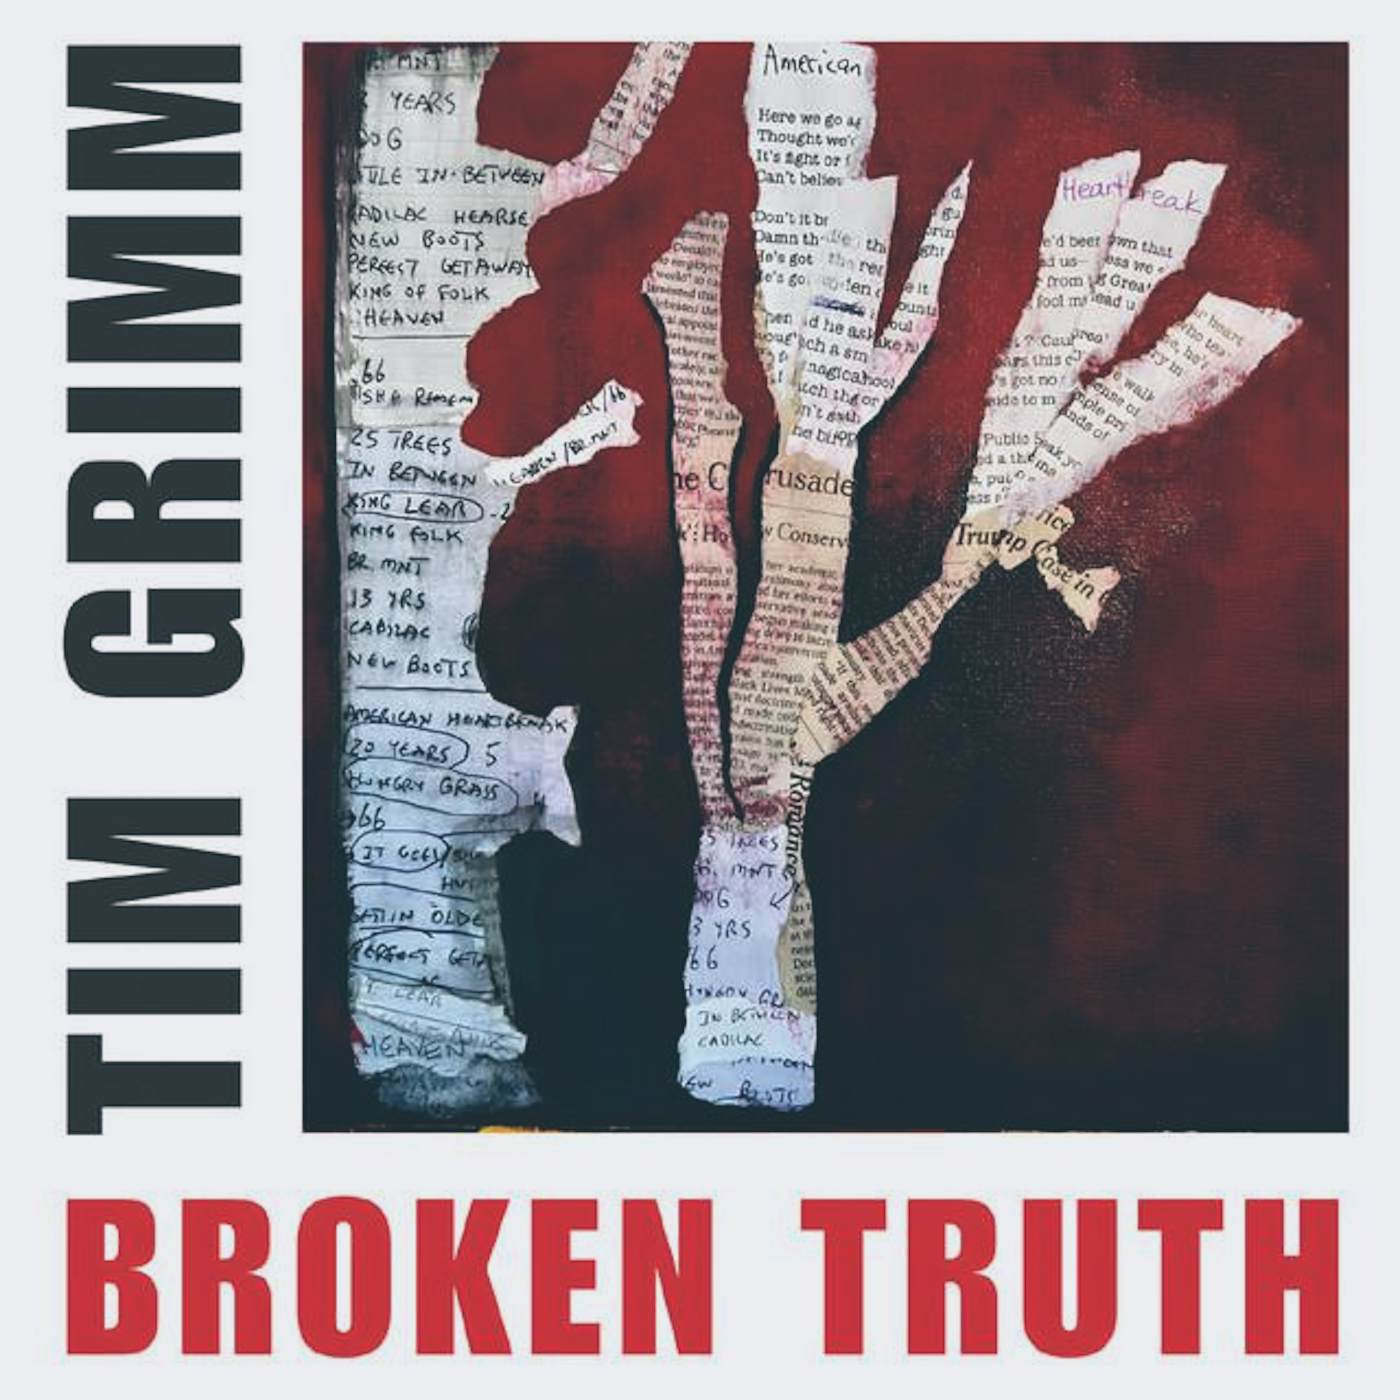 Tim Grimm